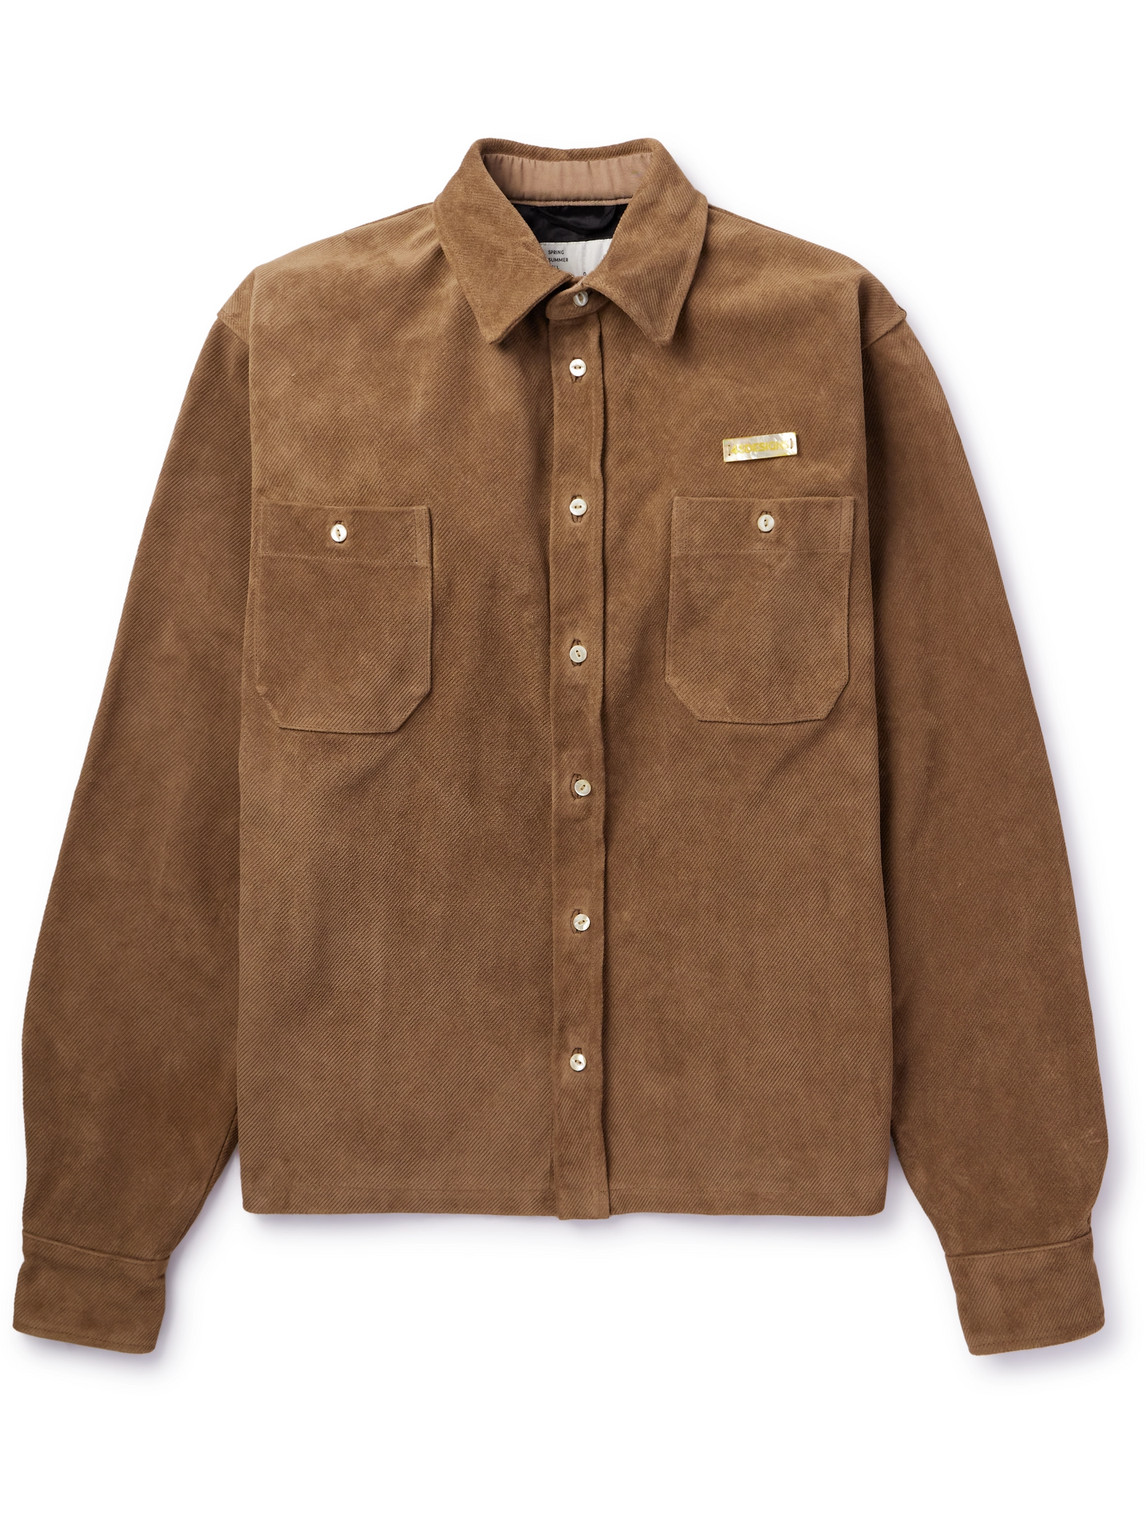 4SDesigns - Throwing Fits Logo-Appliquéd Leather-Corduroy Shirt - Men - Brown - S von 4SDesigns